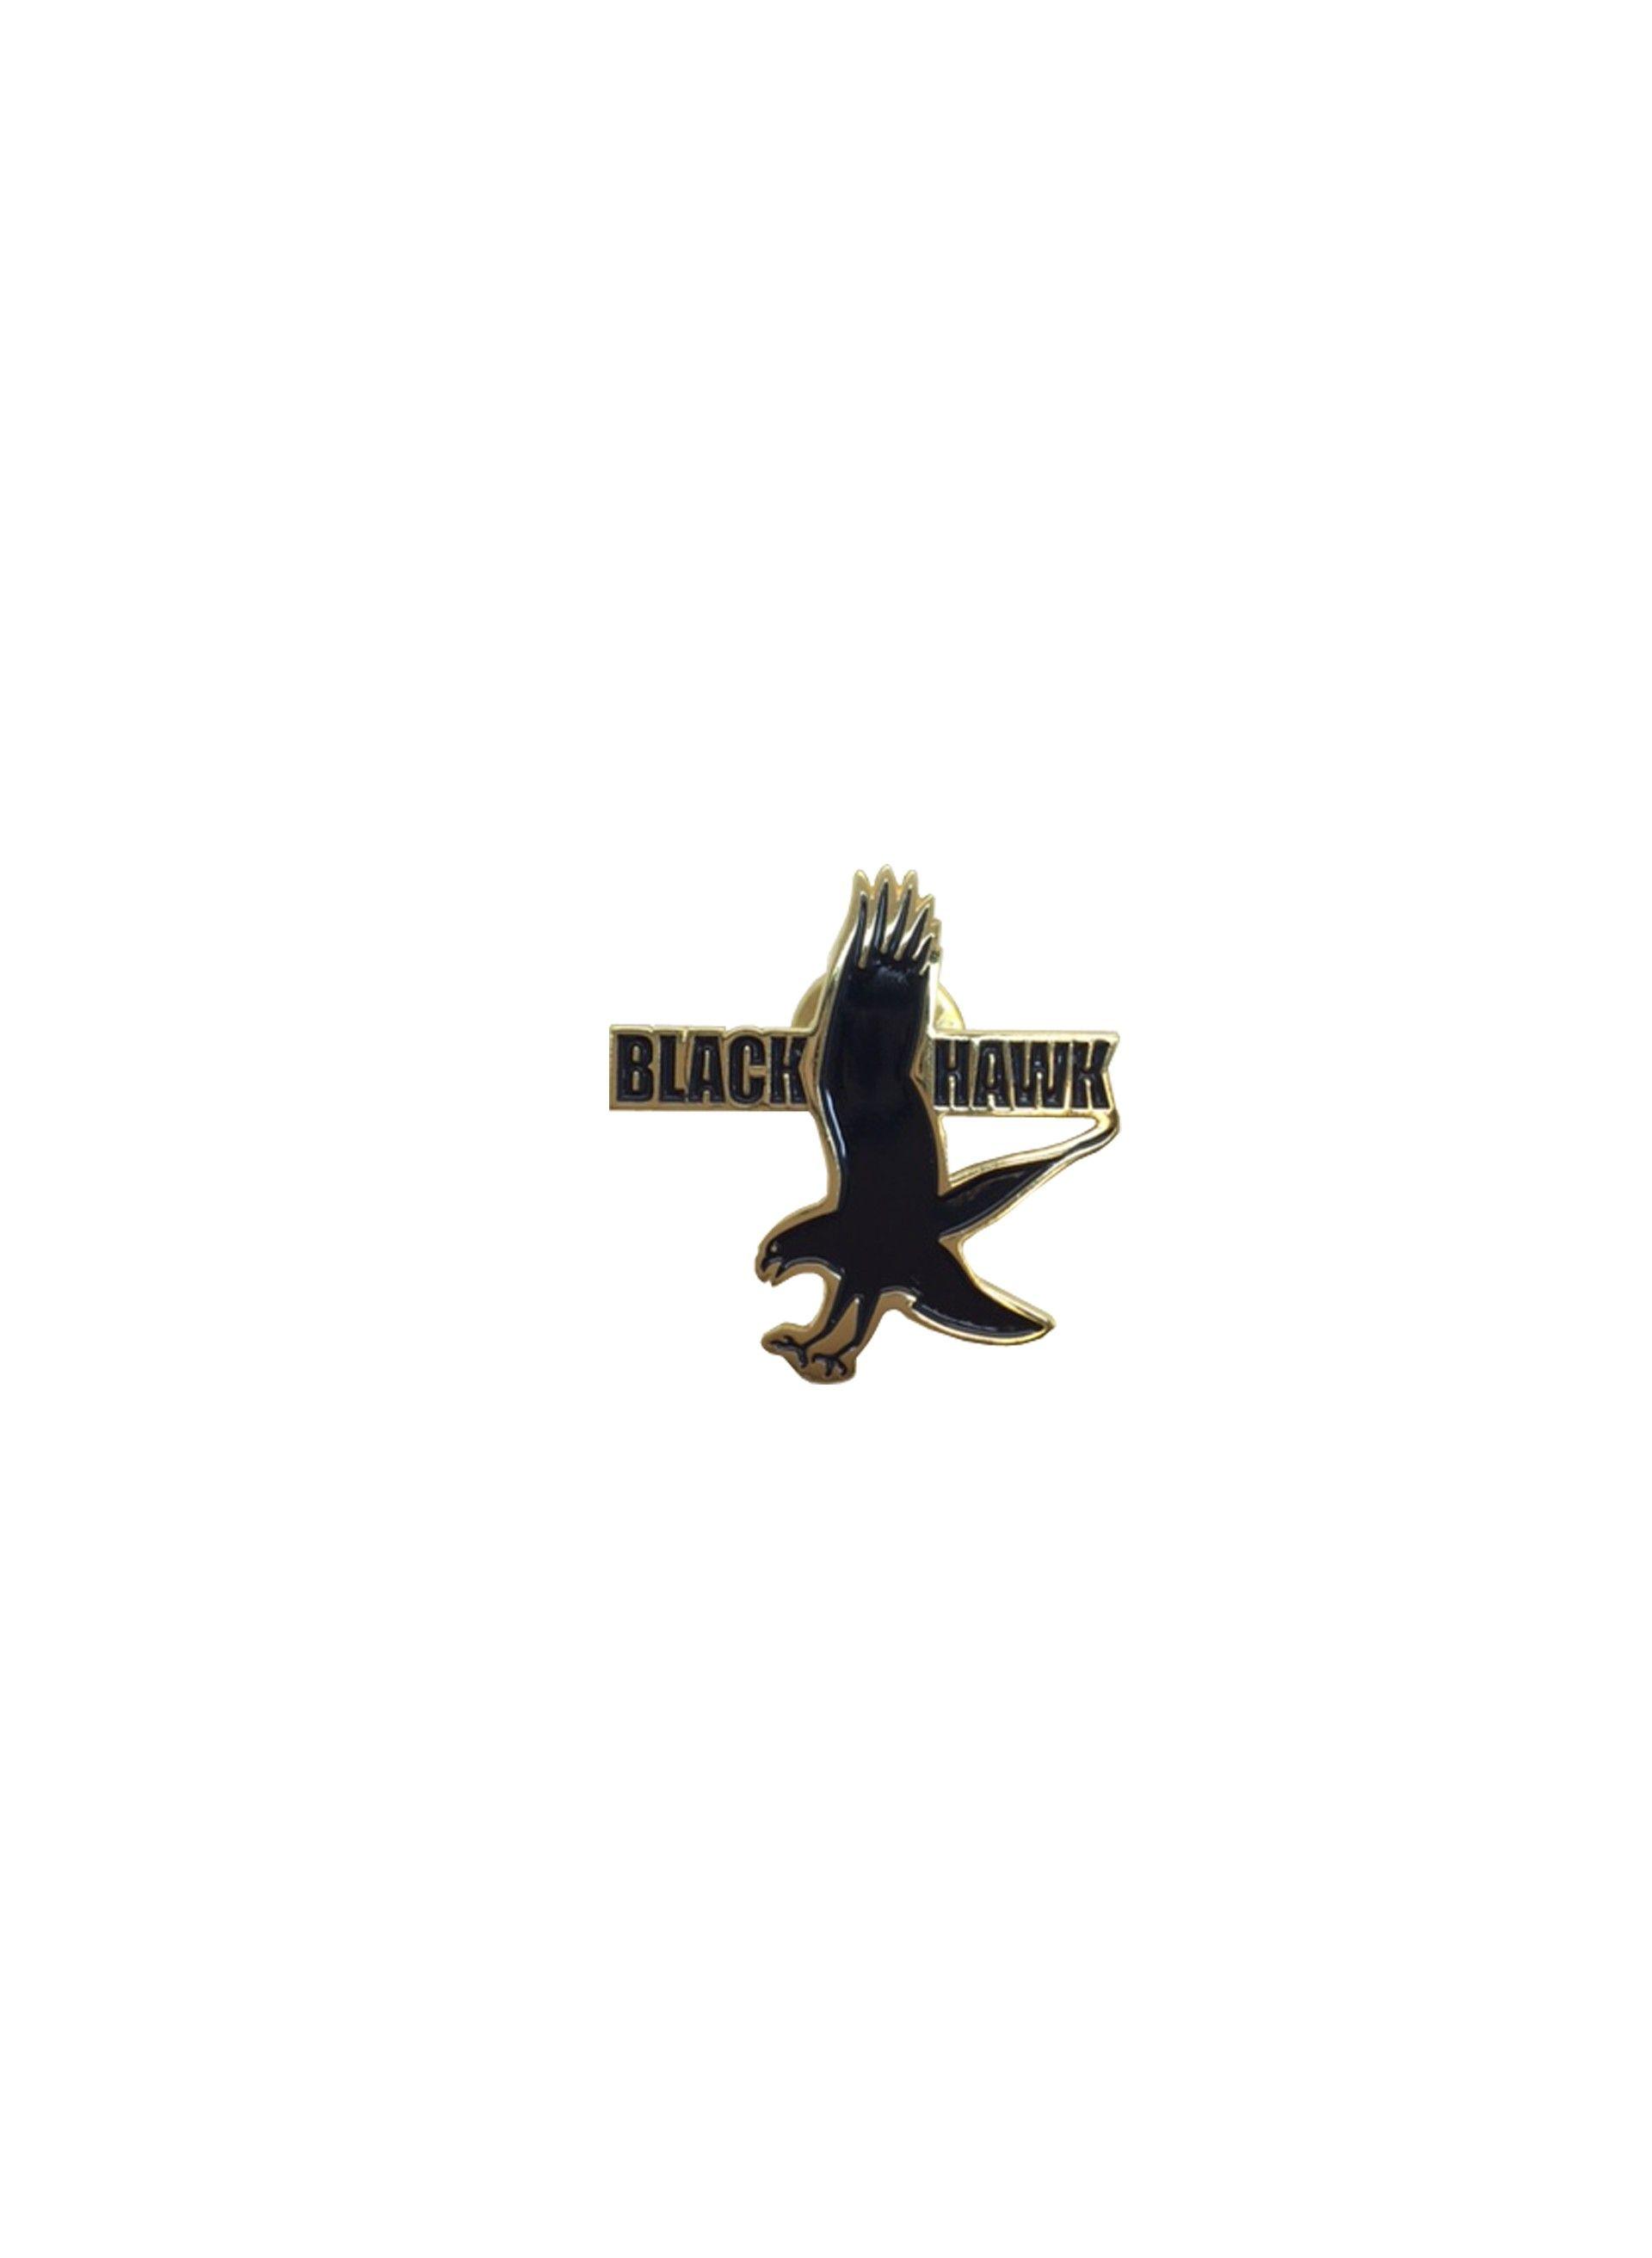 Sikorsky Logo - Welcome to Sikorsky Black Hawk Lapel Pin